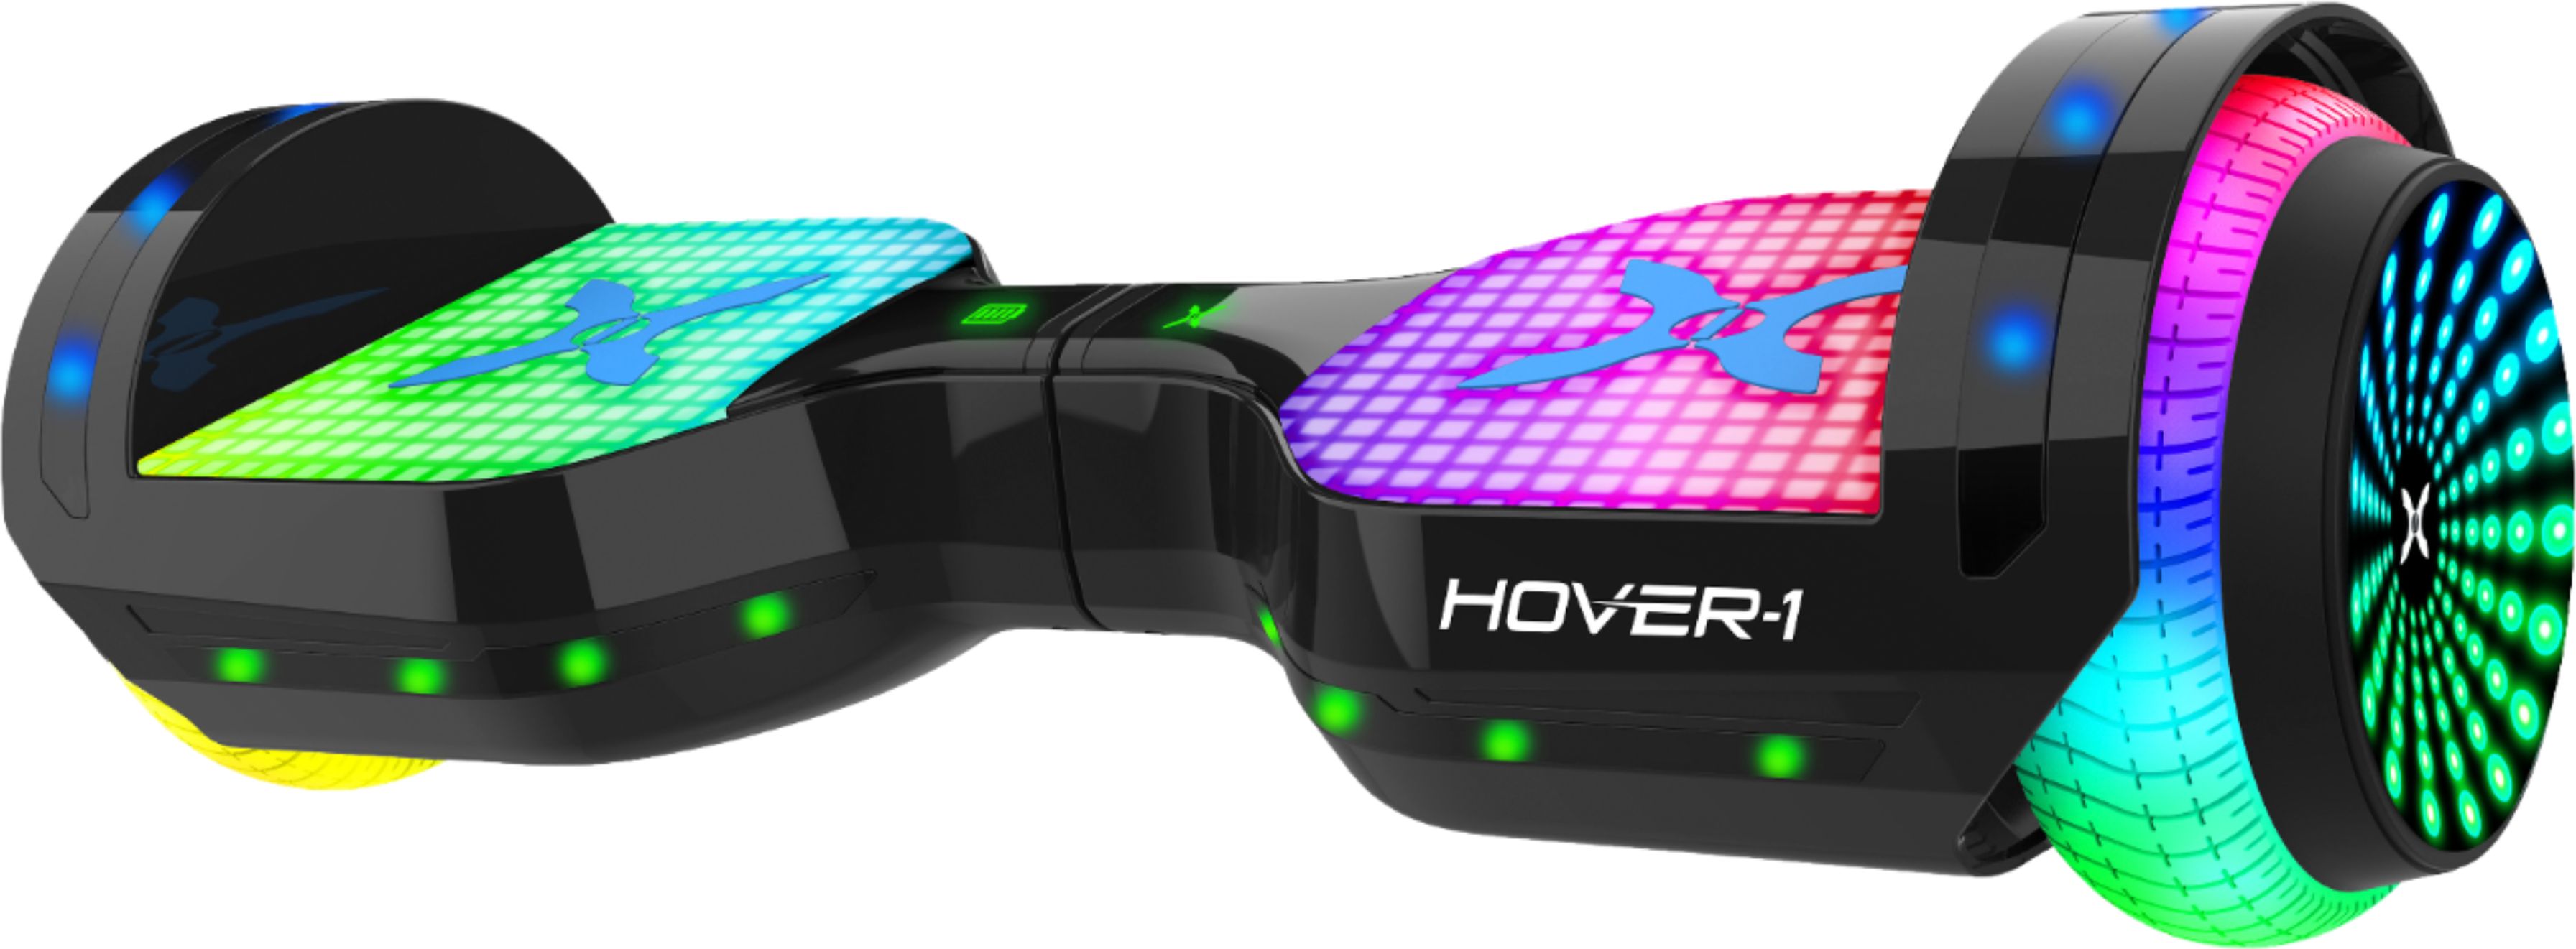 Hover 1 Astro Hoverboard - Black